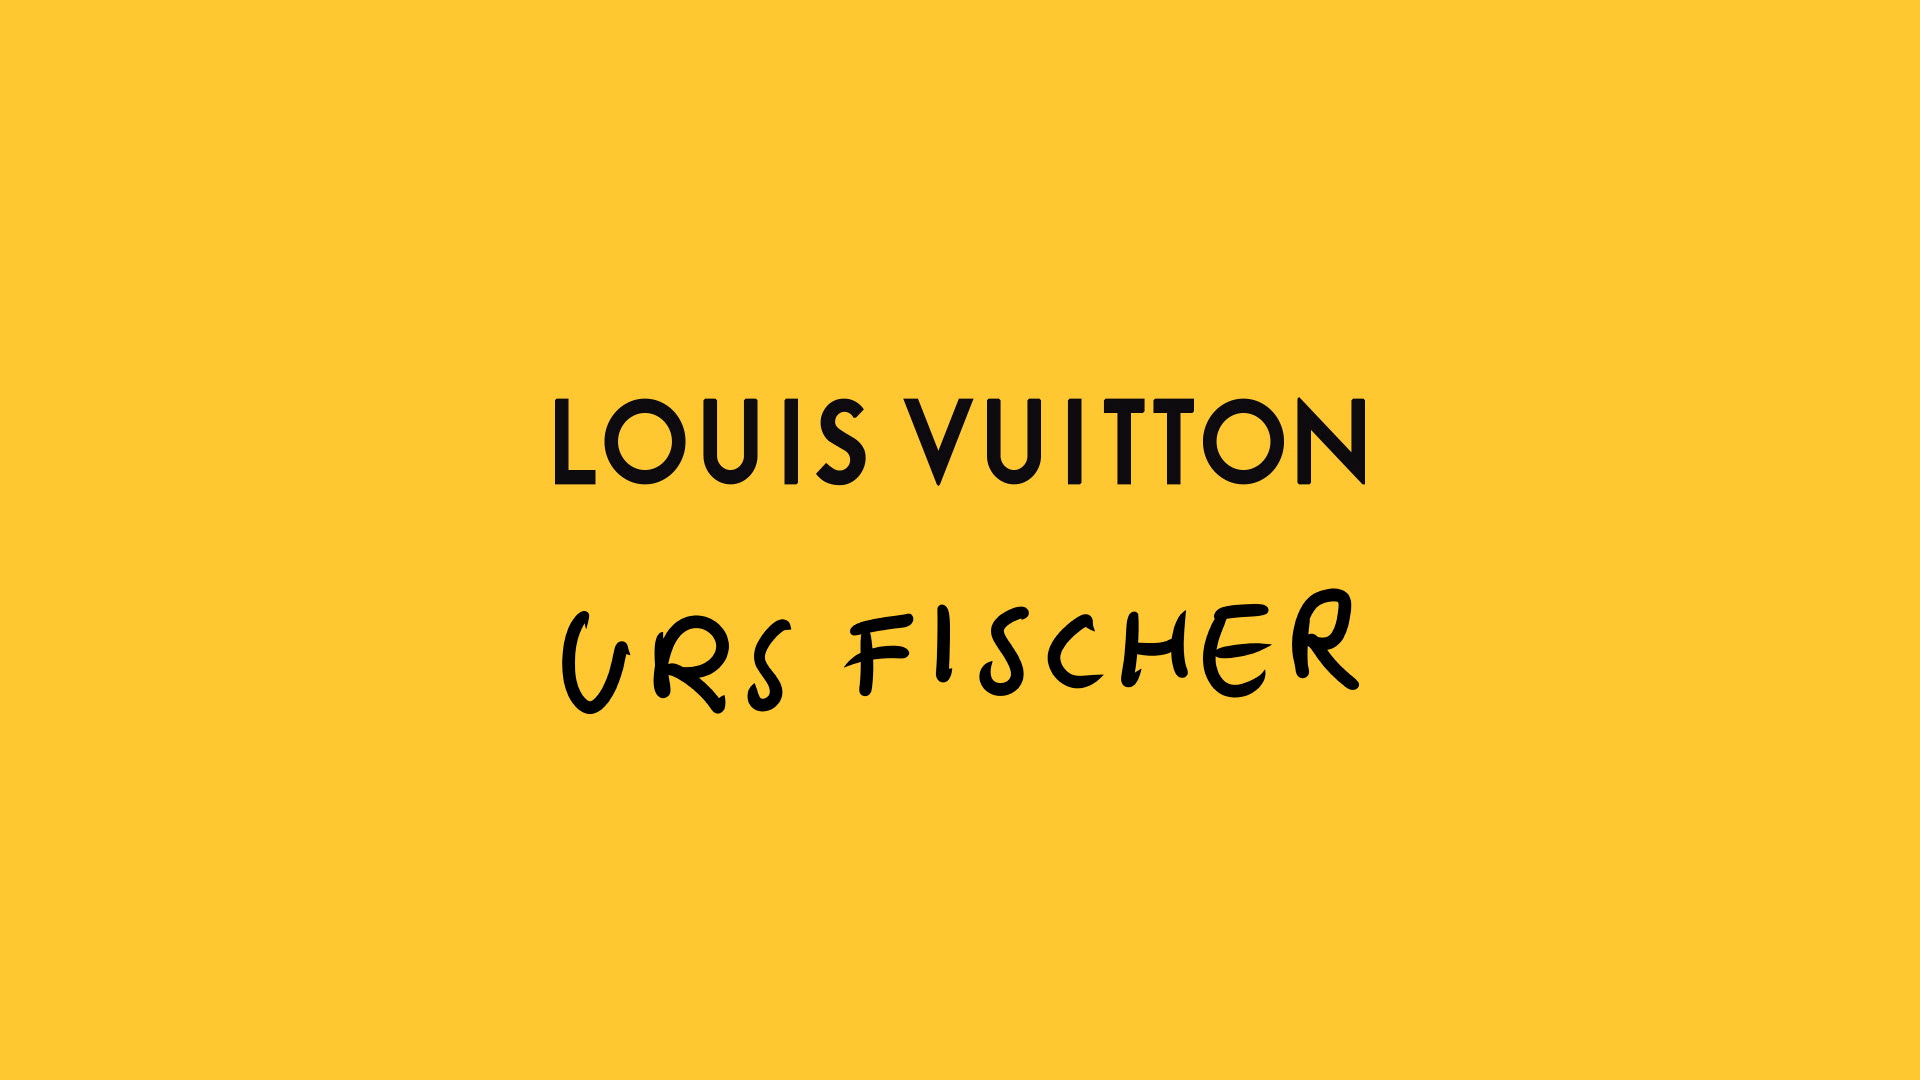 Rafael Casagrande // PORTFOLIO - Louis Vuitton x Urs Fischer